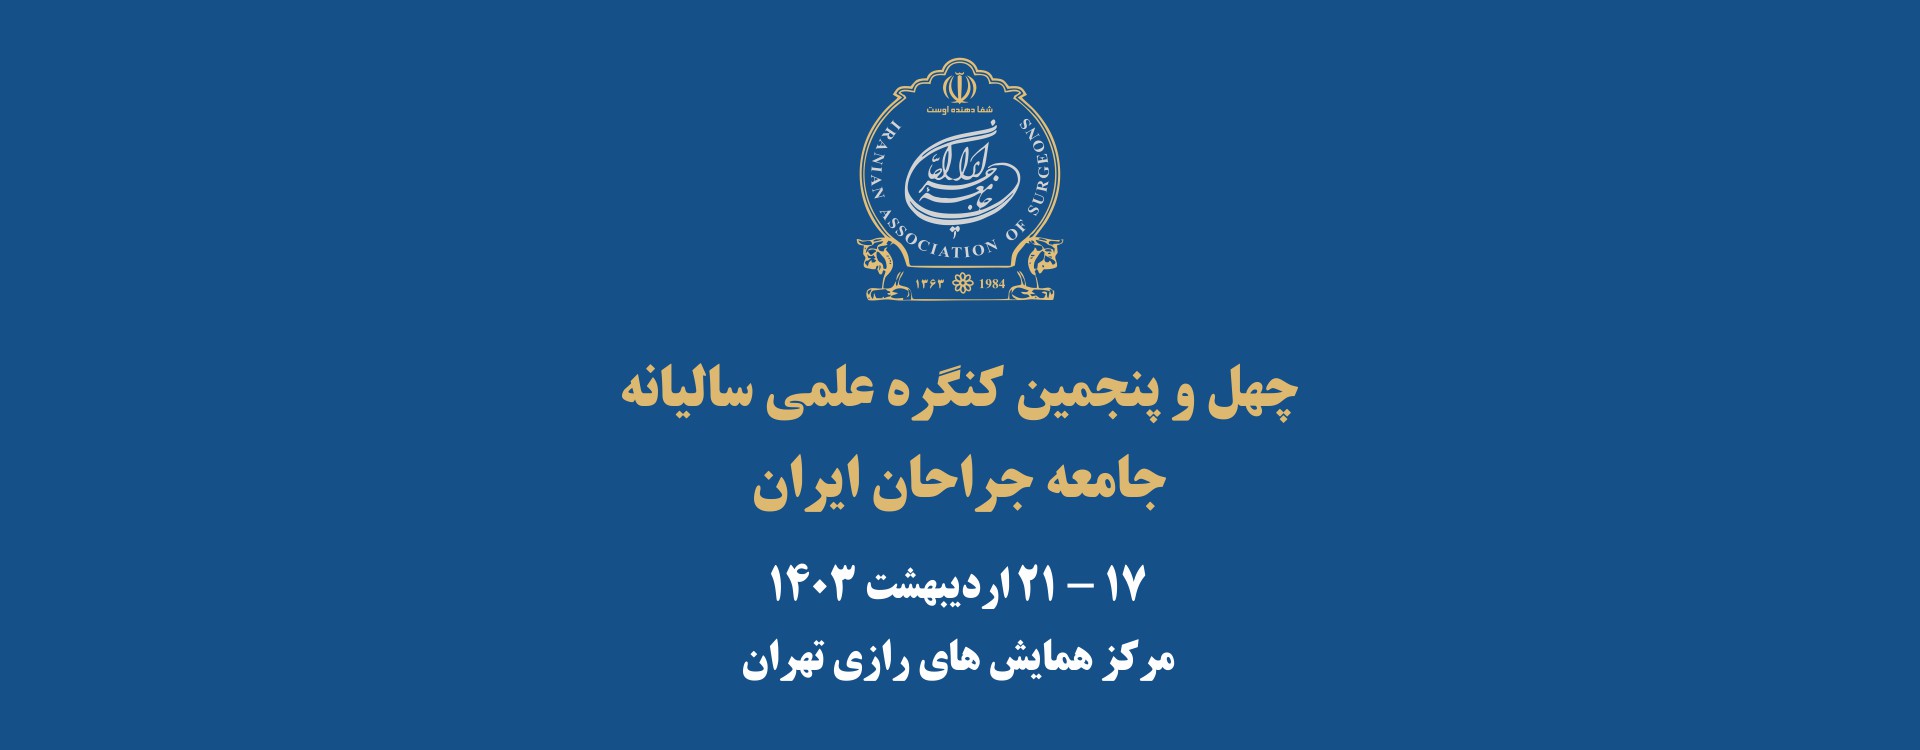 45th Iranian Association Of Surgeons Congress